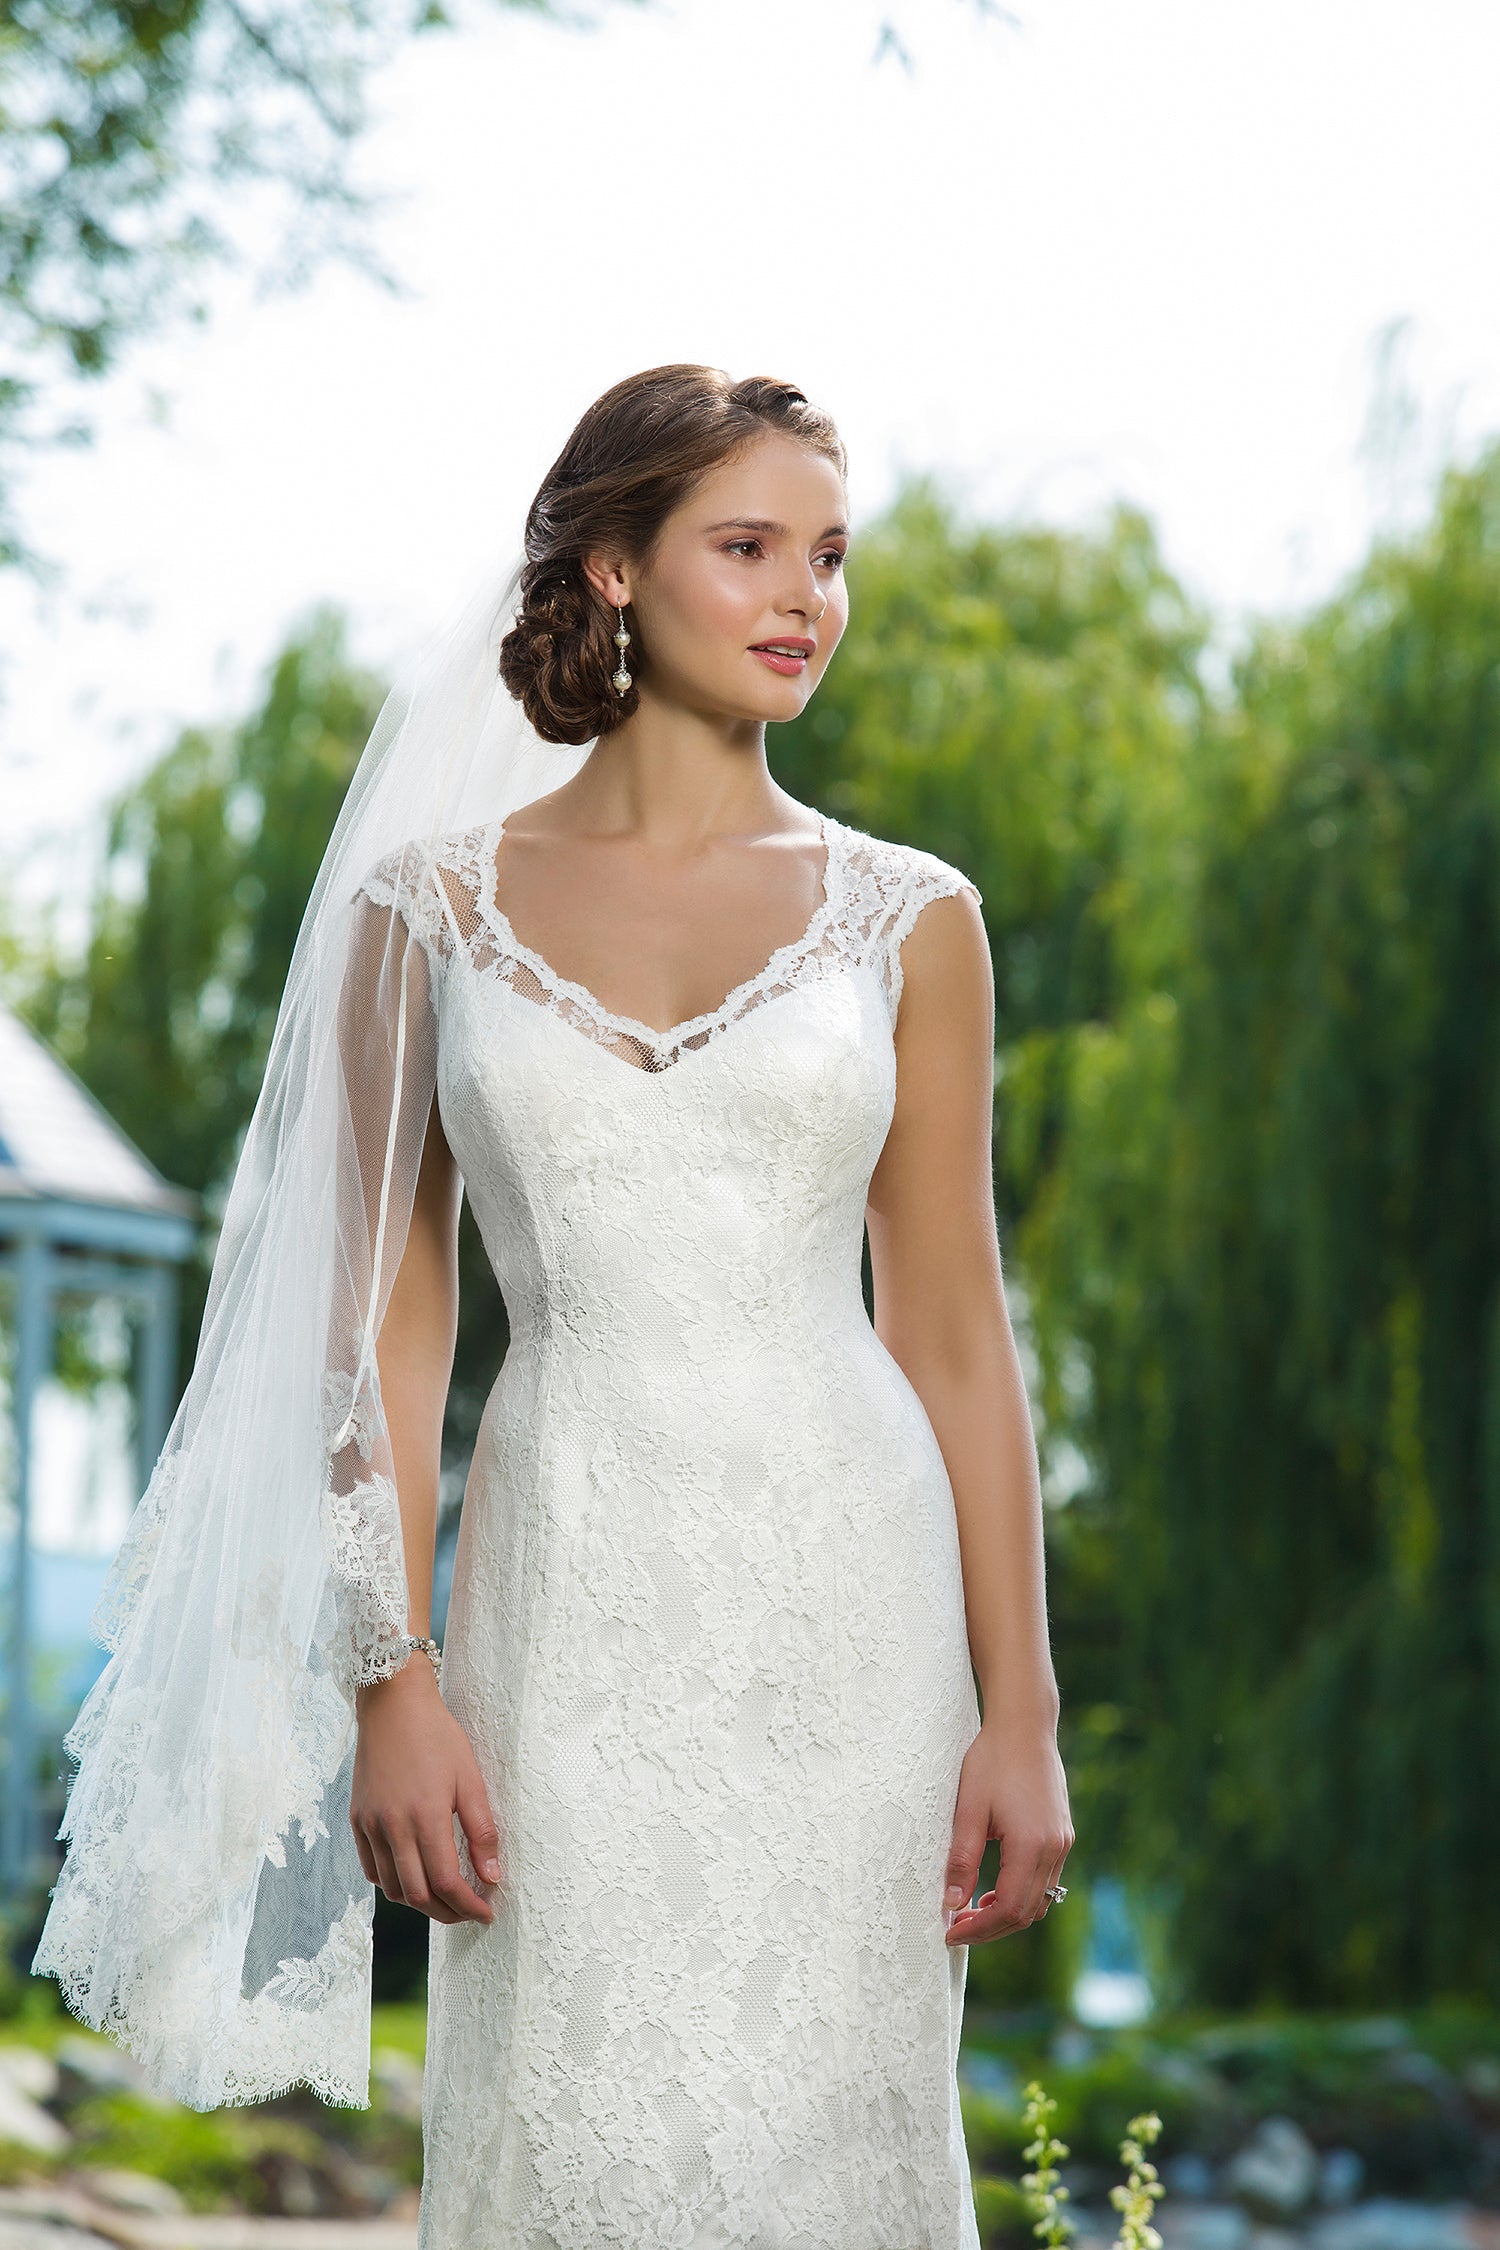 *NEW* Sweetheart Designer Wedding Gown - #6101